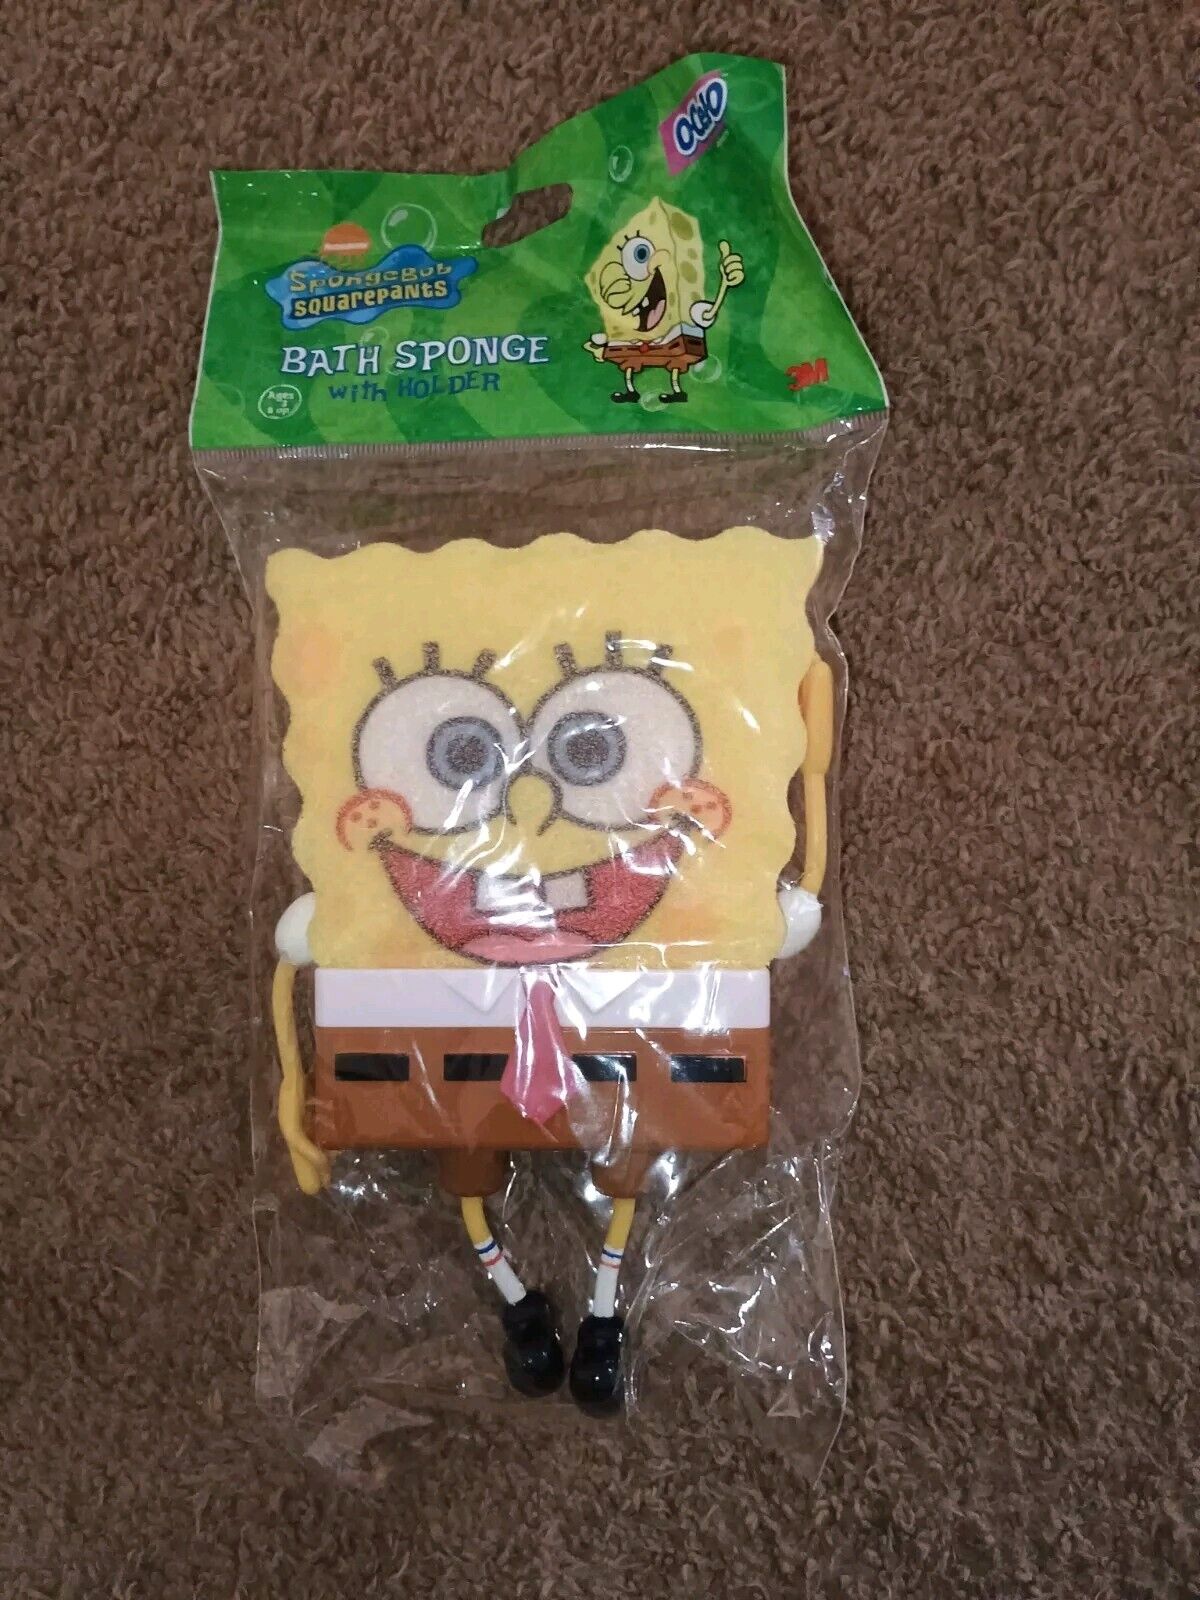 VTG New Spongebob Squarepants Bath Sponge and Holder 2002 Toy